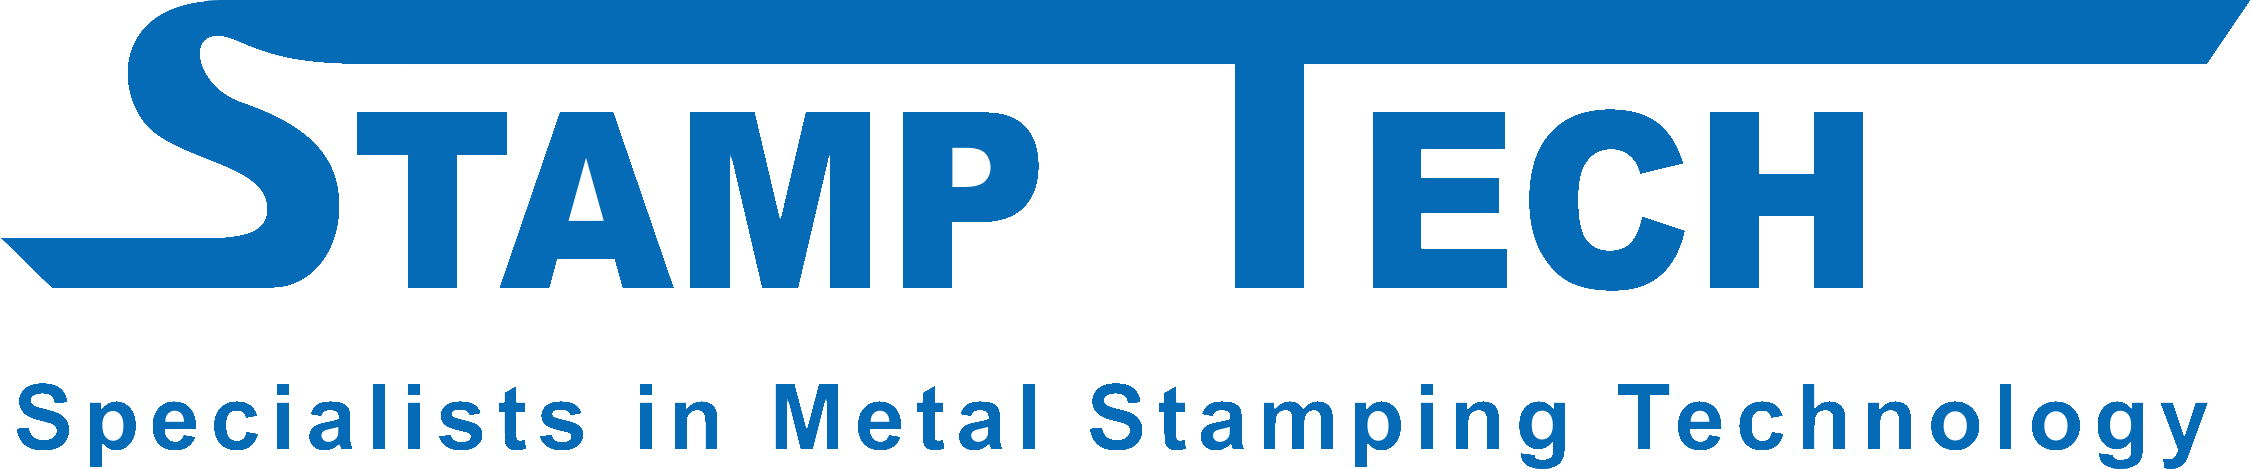 stamptech-logo